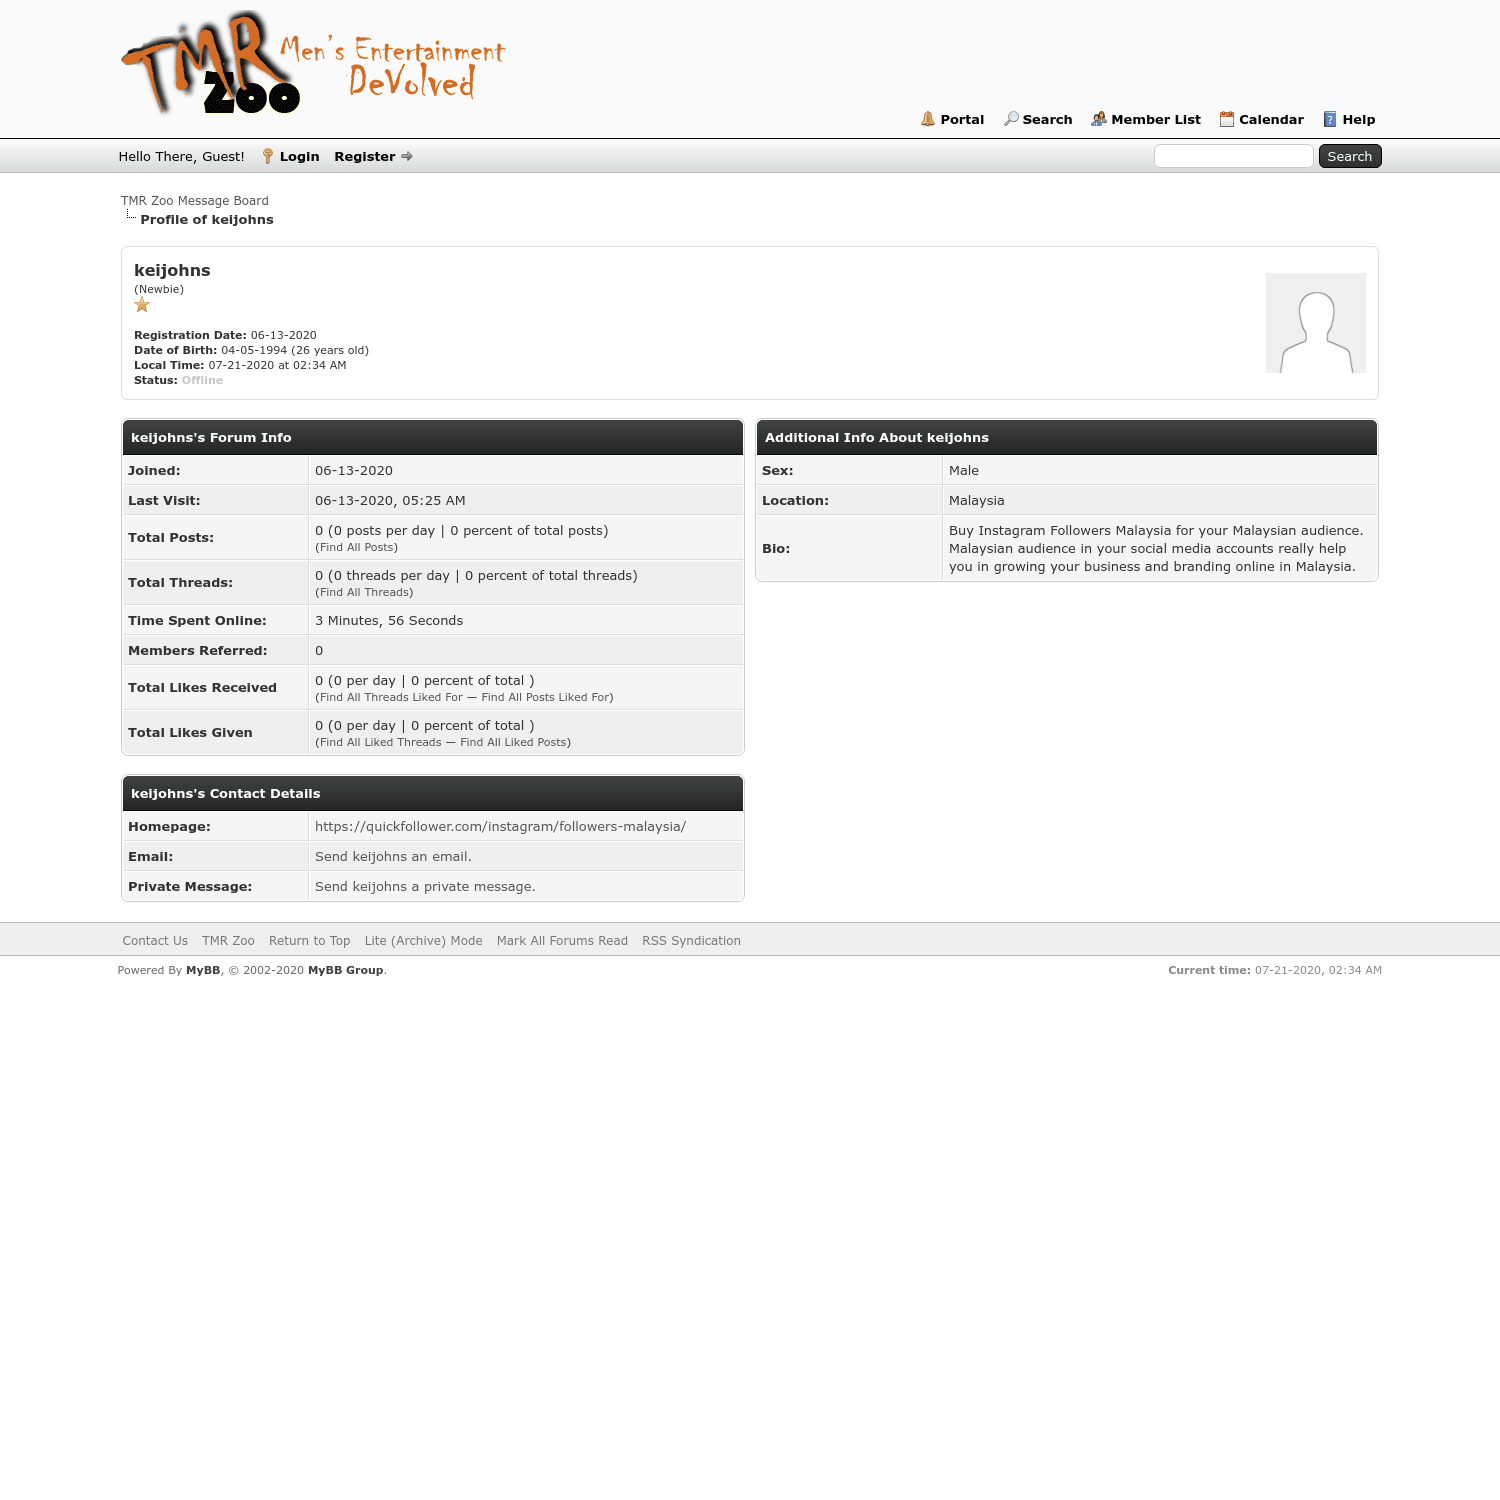 TMR Zoo Message Board - Profile of keijohns